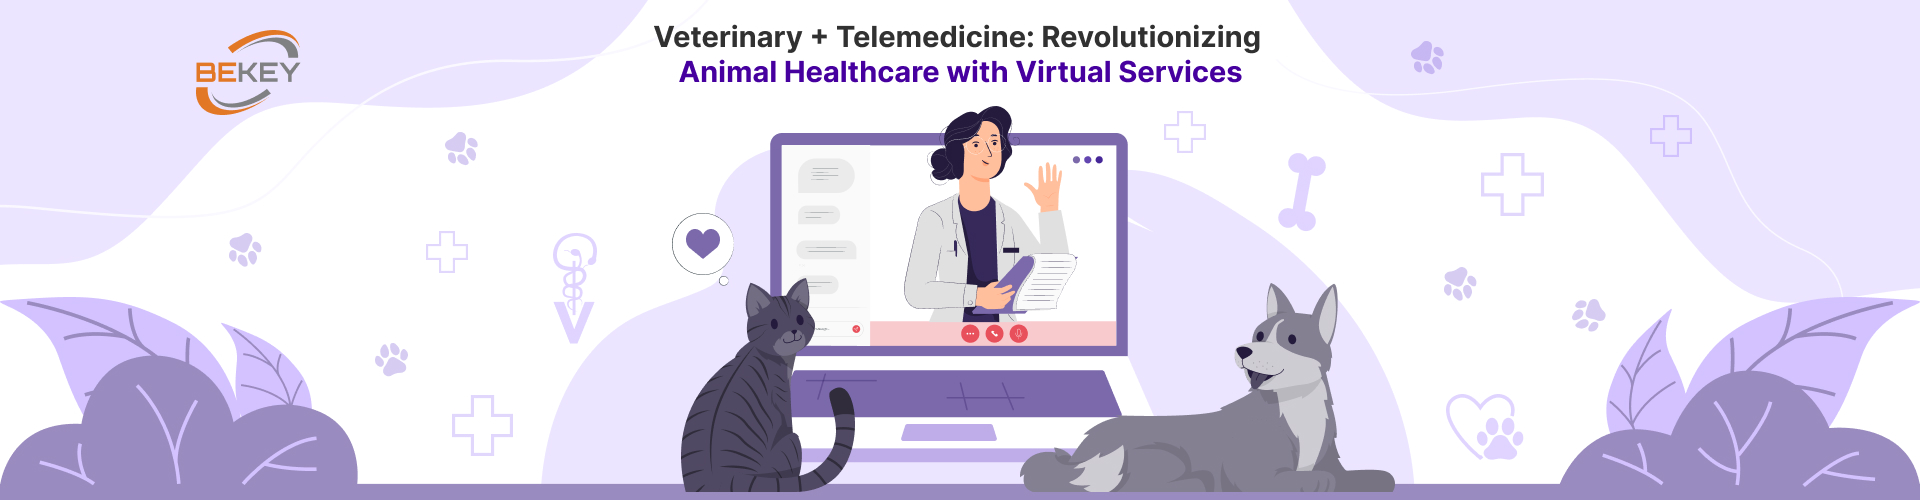 Veterinary + Telemedicine: Revolutionizing Animal Healthcare with Virtual Services - image